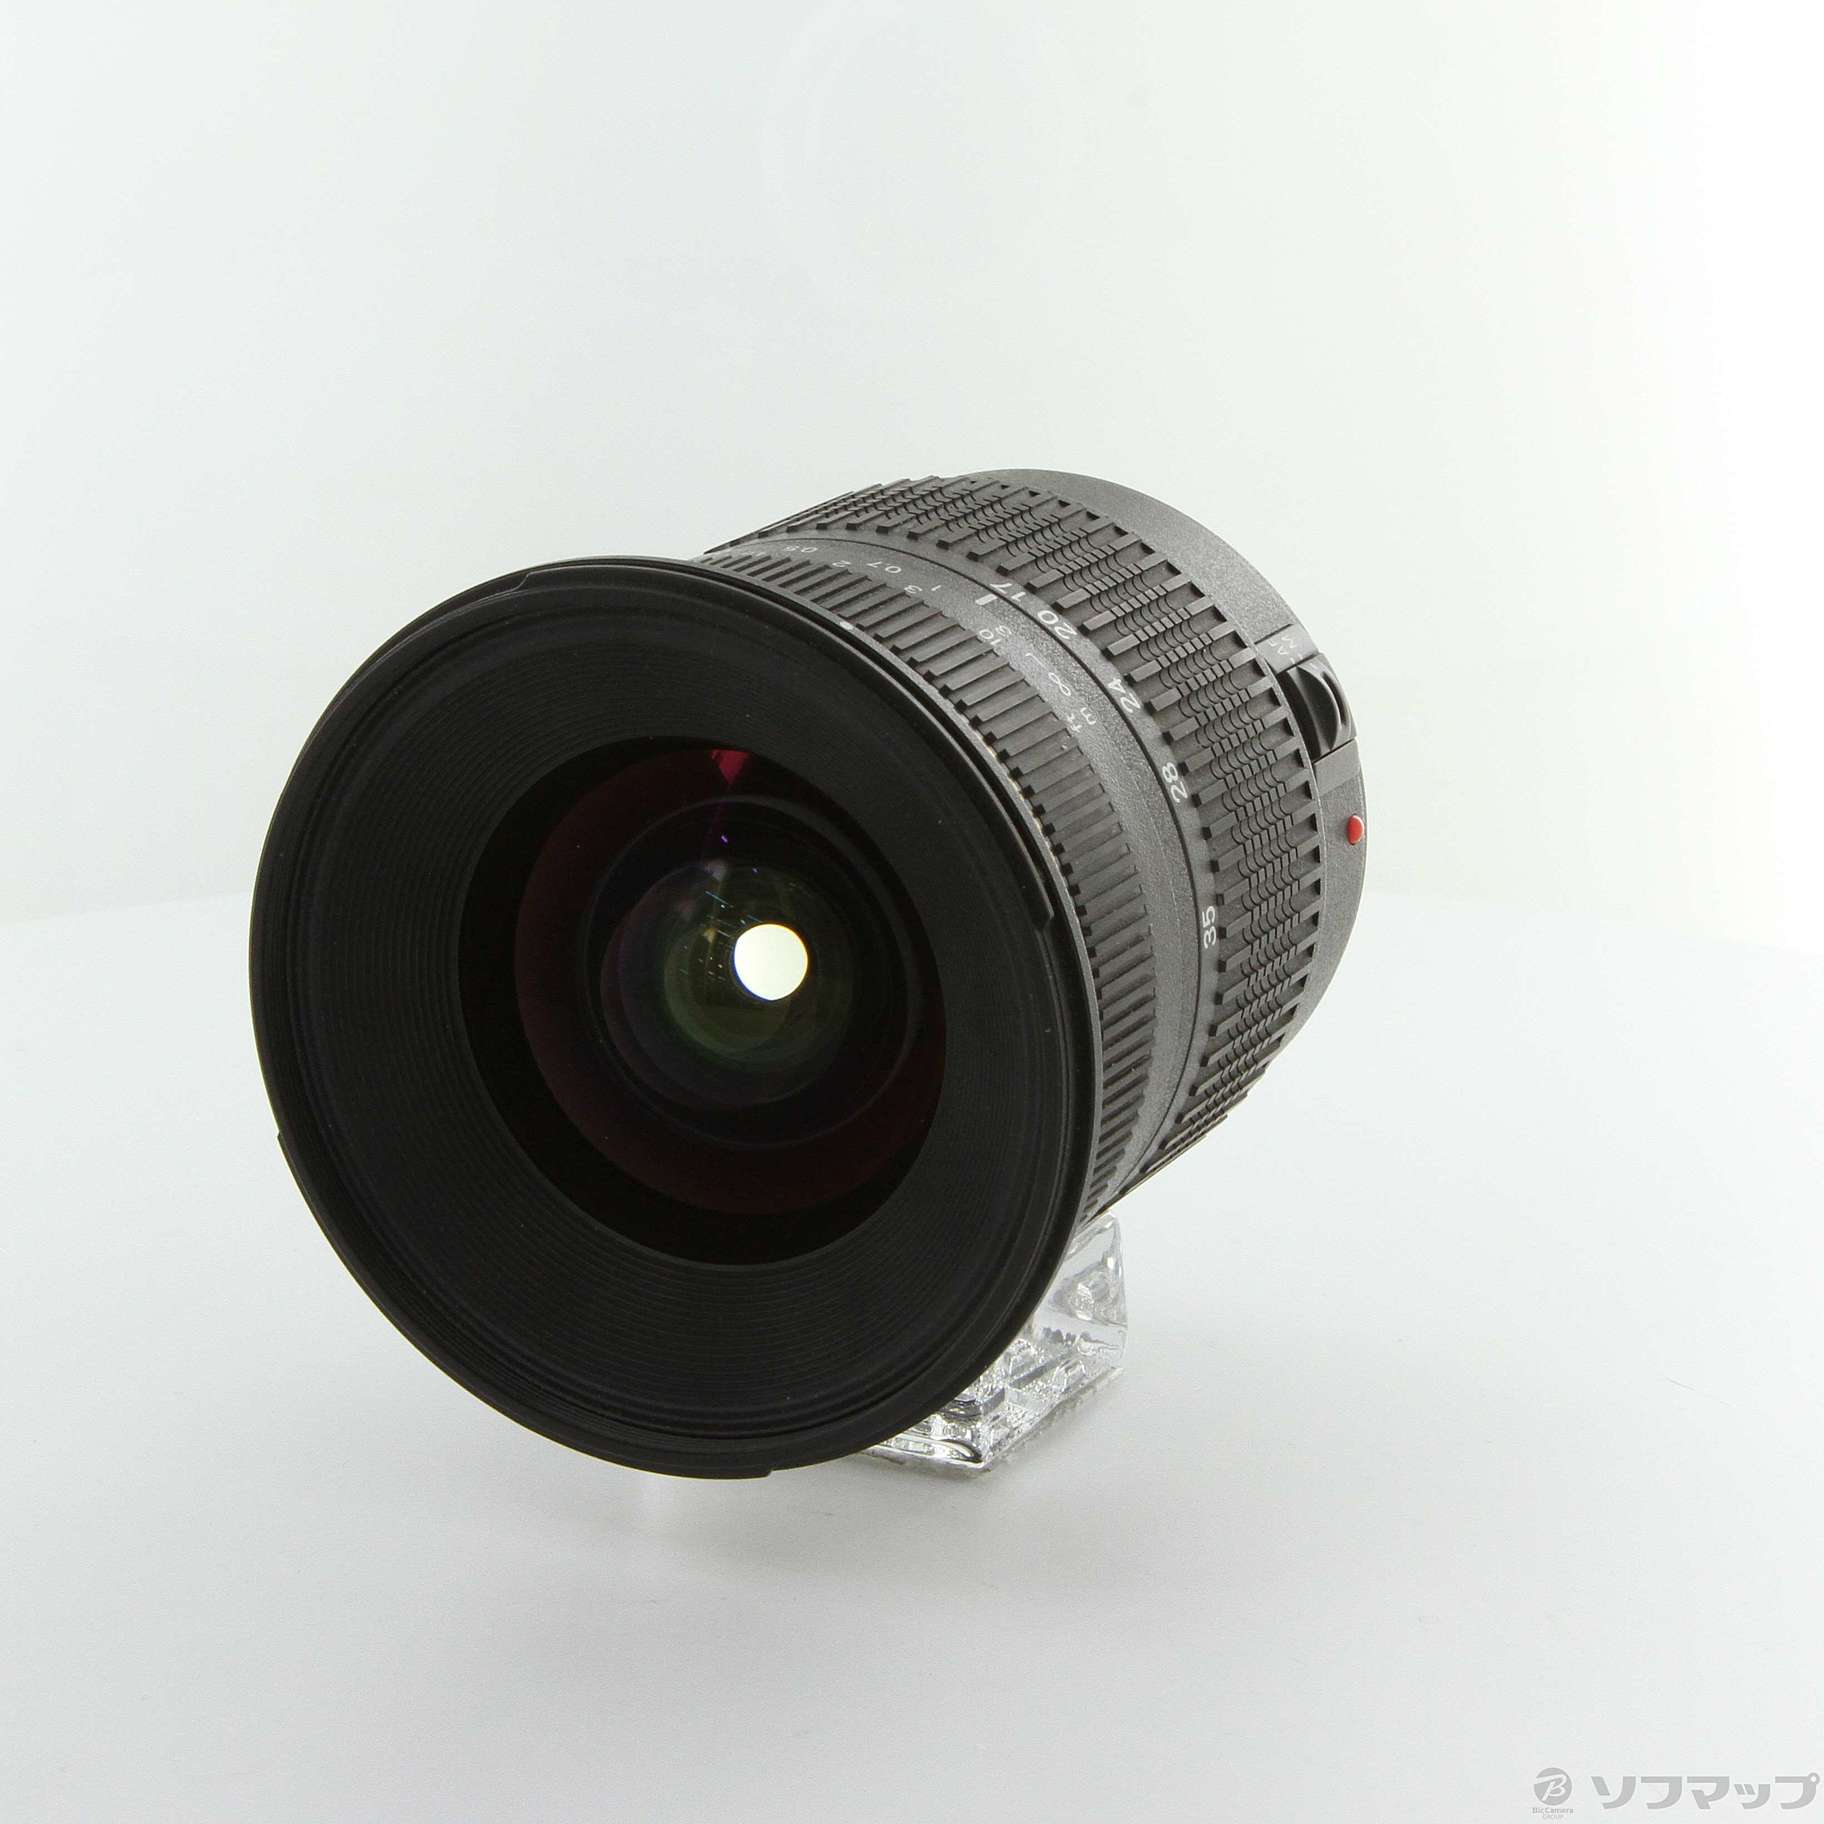 中古】TAMRON AF 17-35mm F2.8-4 Di (A05E) (Canon用) [2133031623011